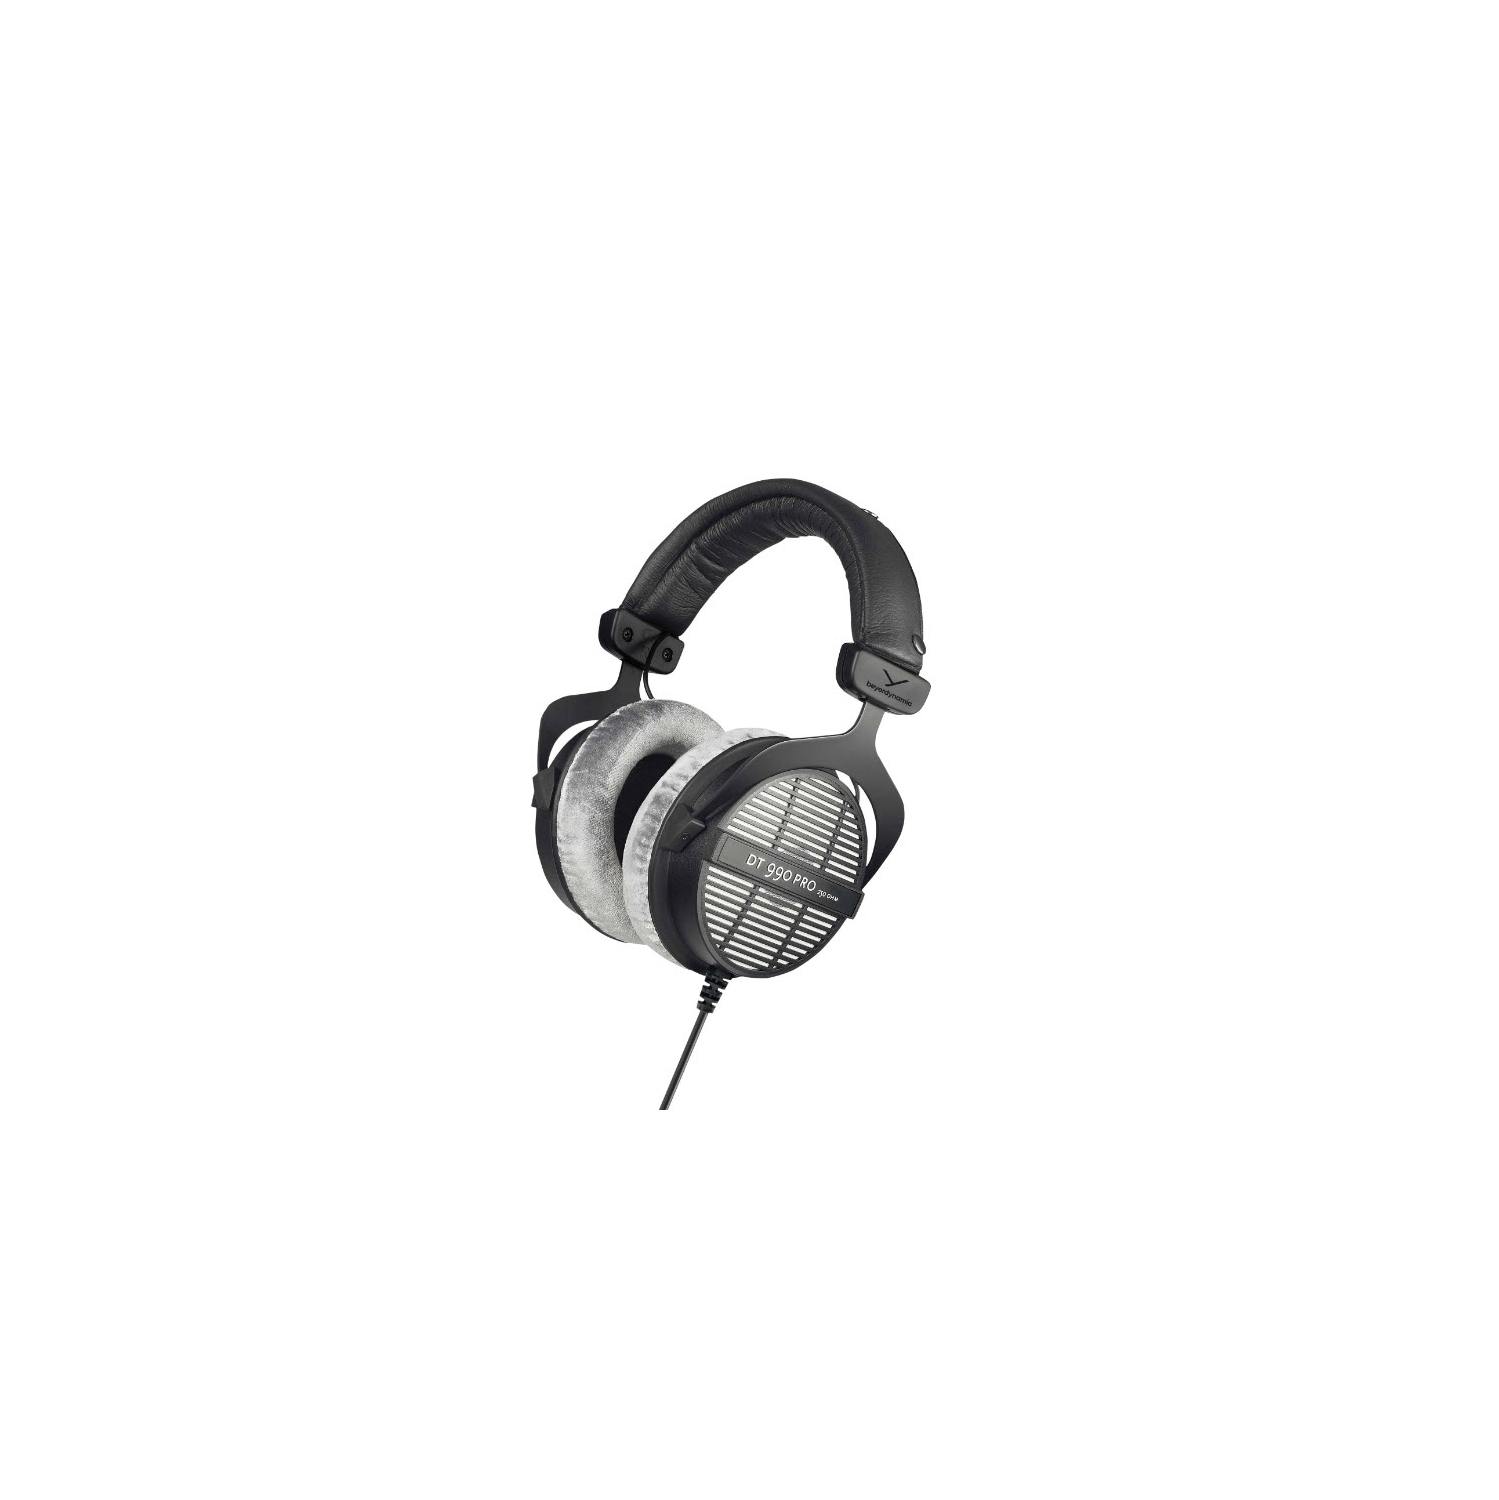 Beyerdynamic DT 990 PRO Studio Headphones for Mixing and Mastering